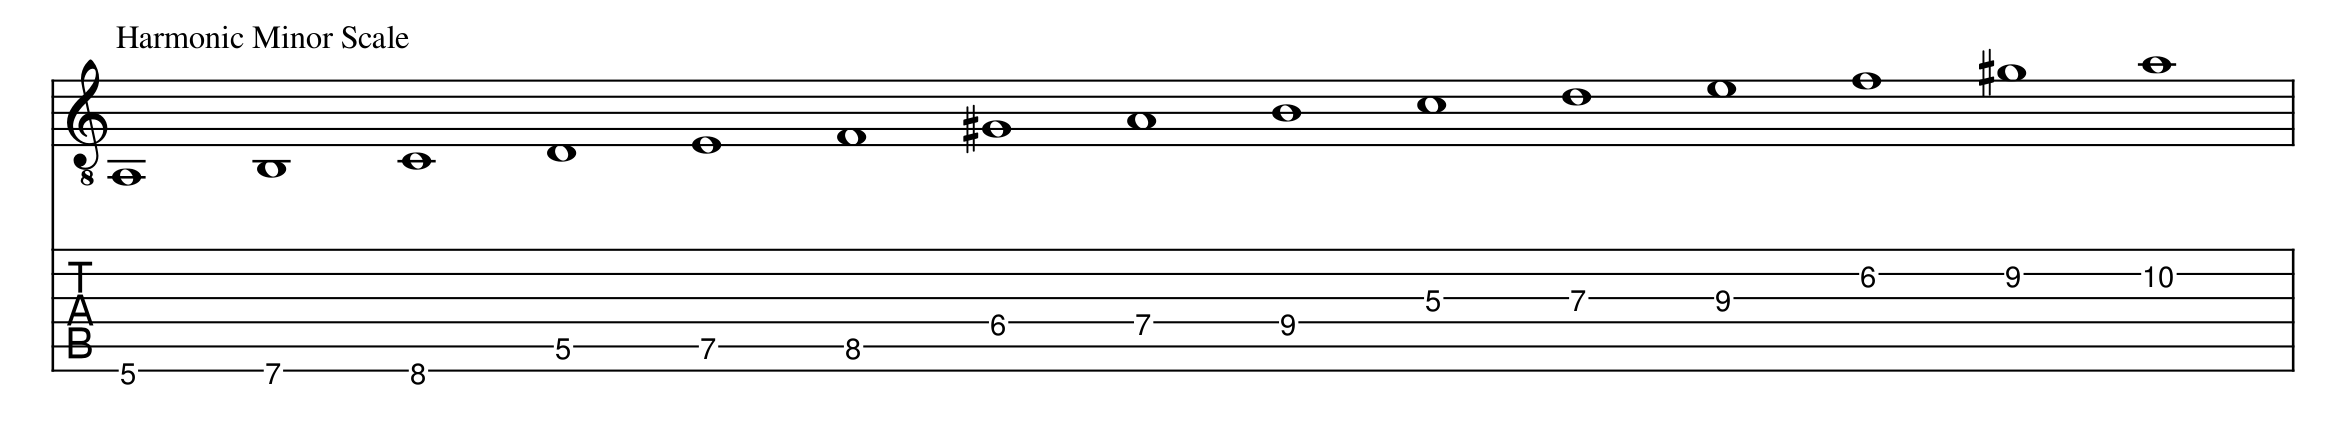 A Harmonic Minor Scale tablature